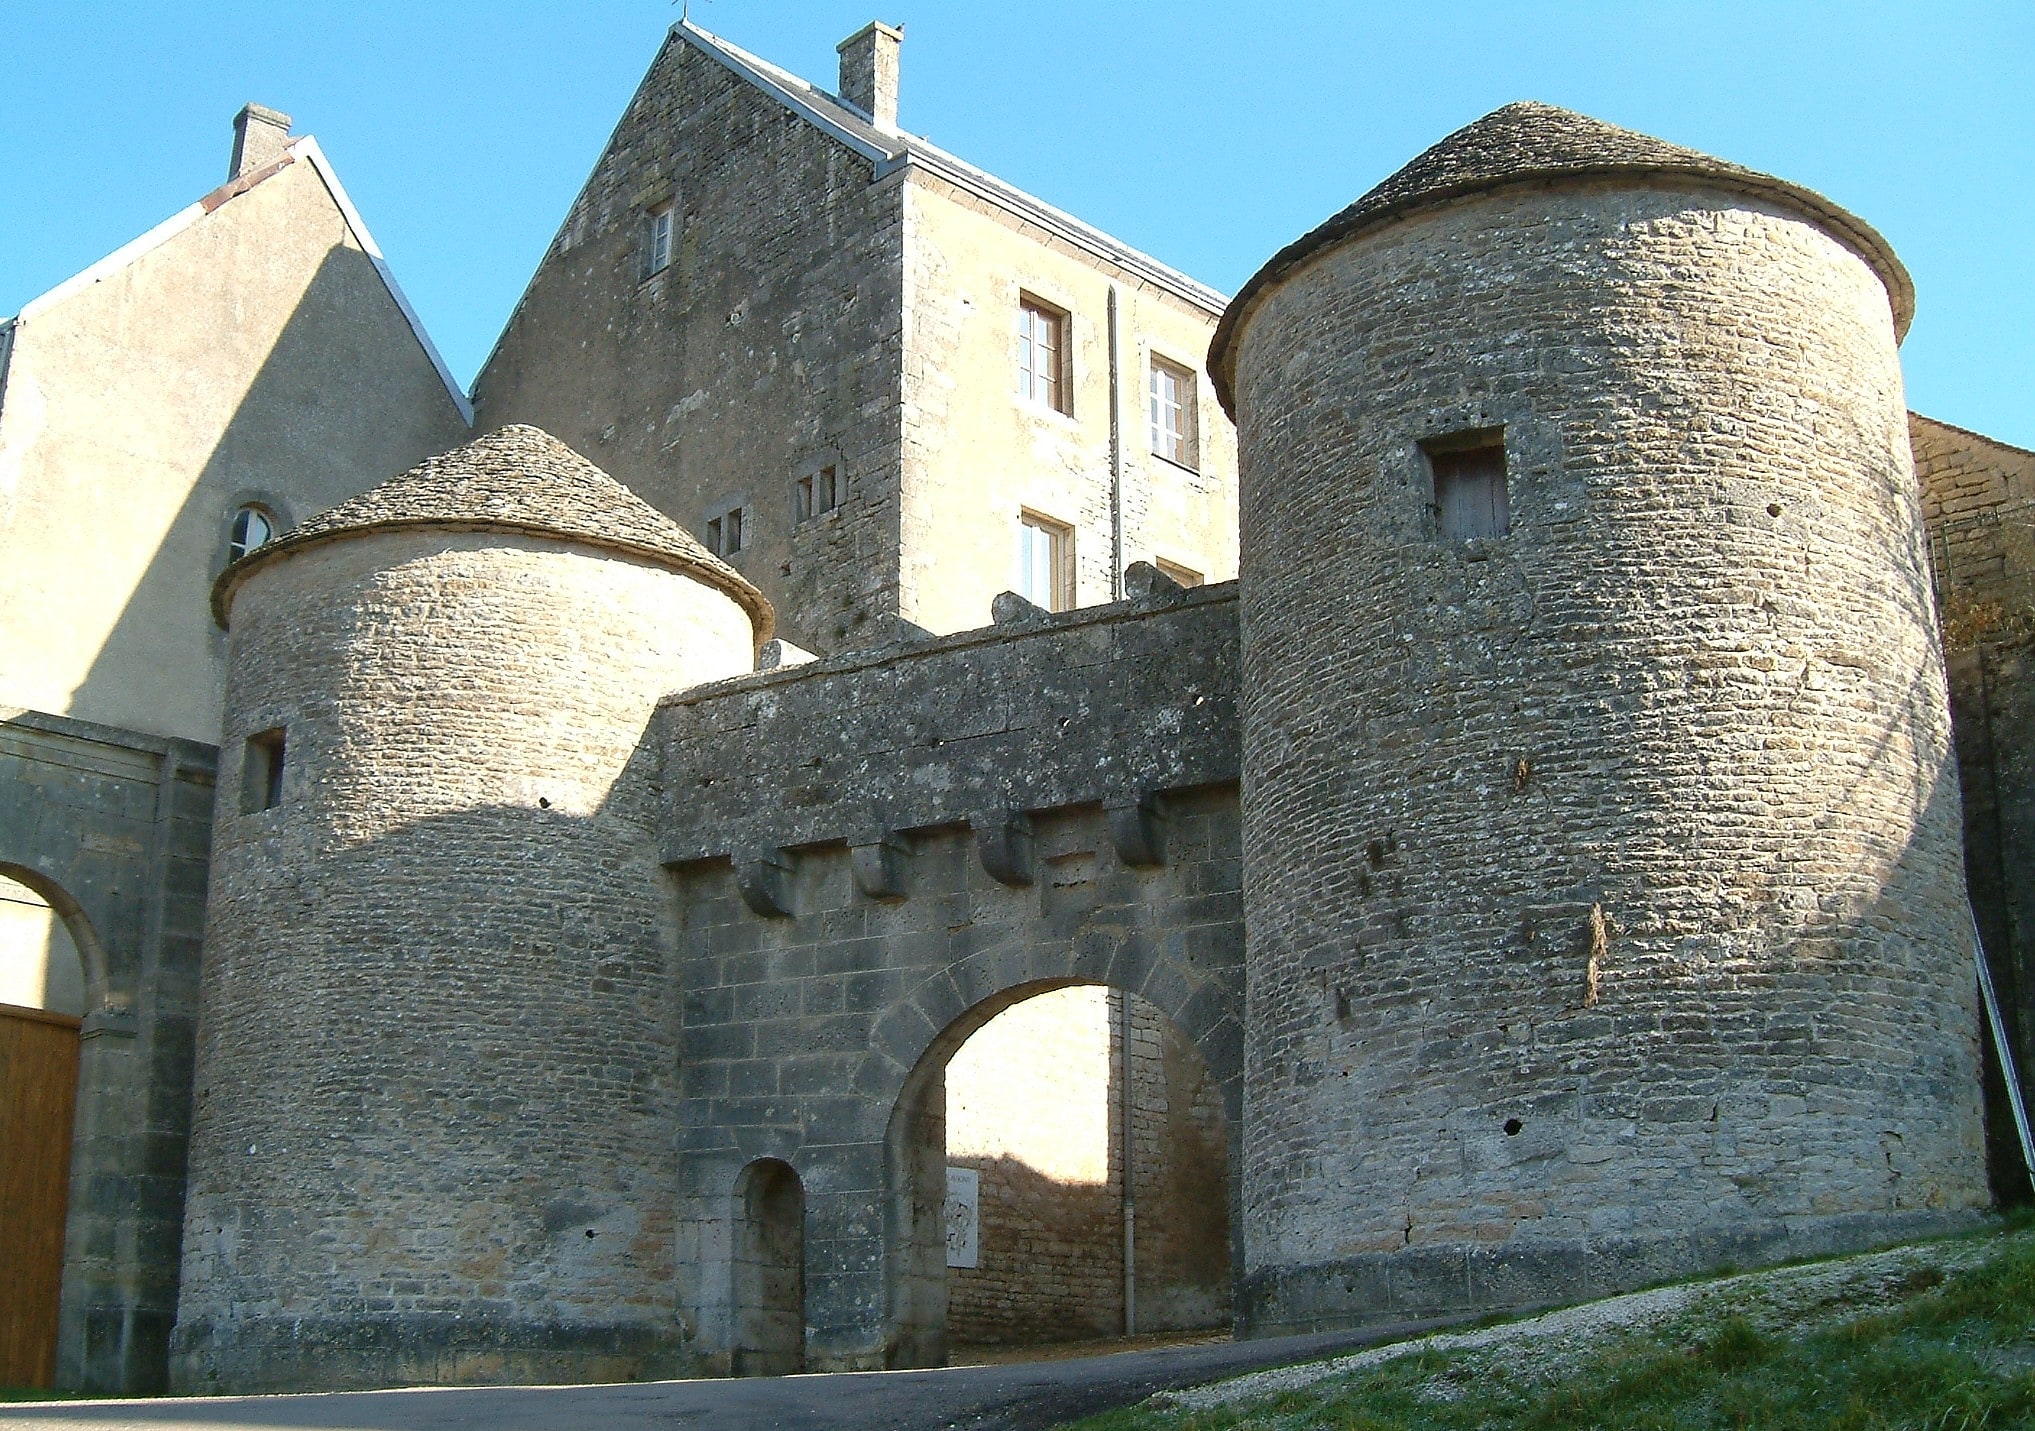 Flavigny-sur-Ozerain, France